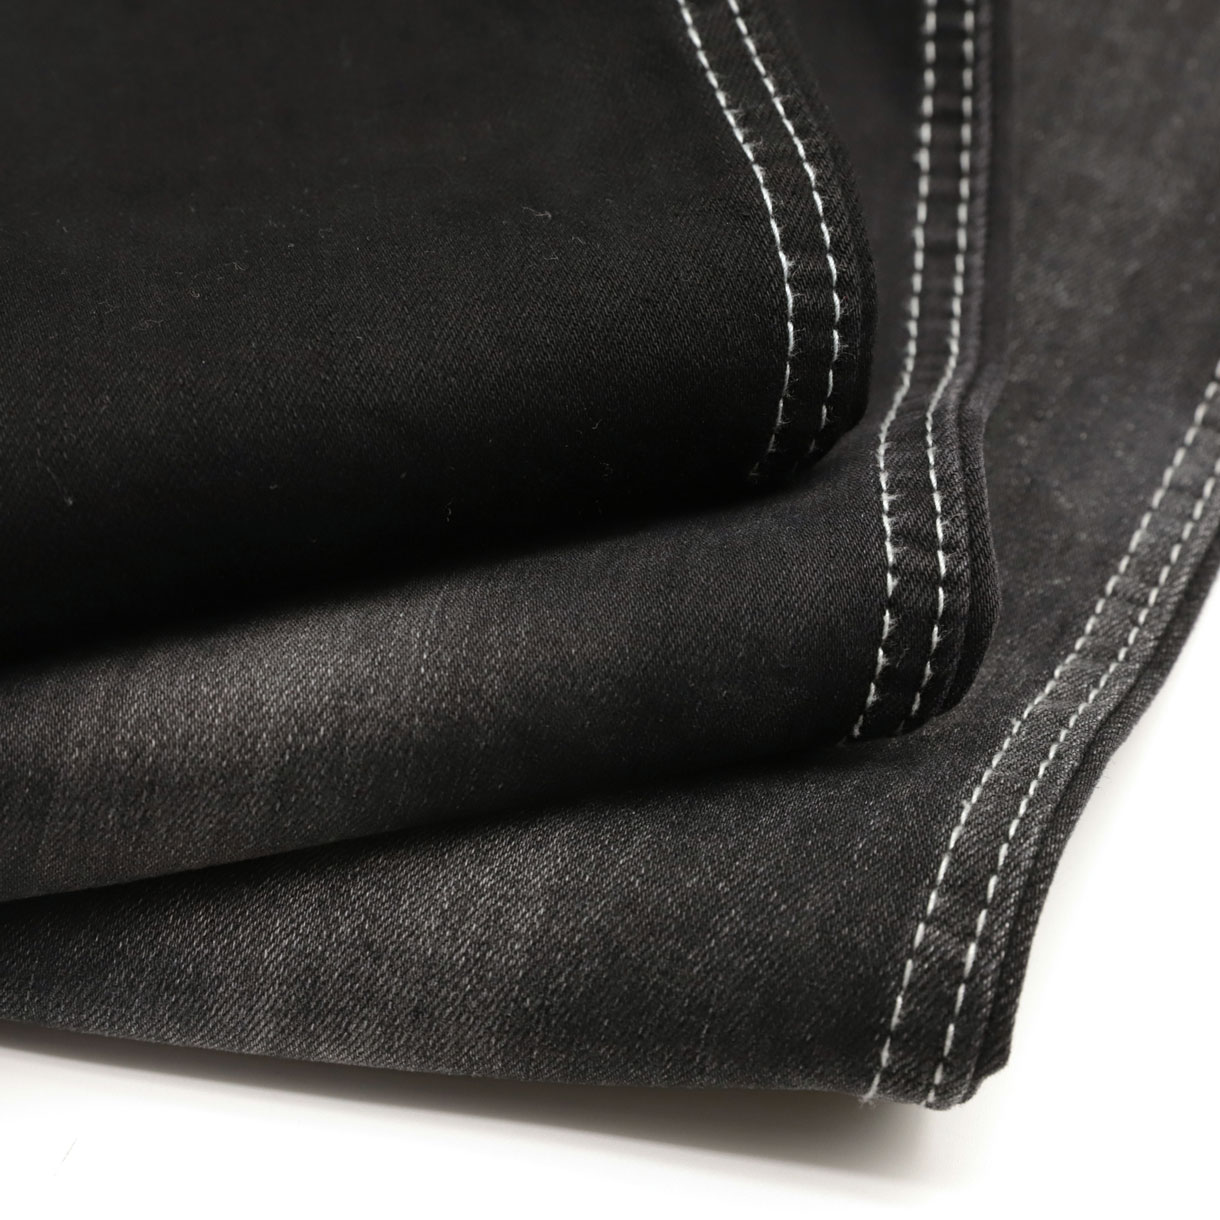 Why Do Stretch Denim Fabric? 2